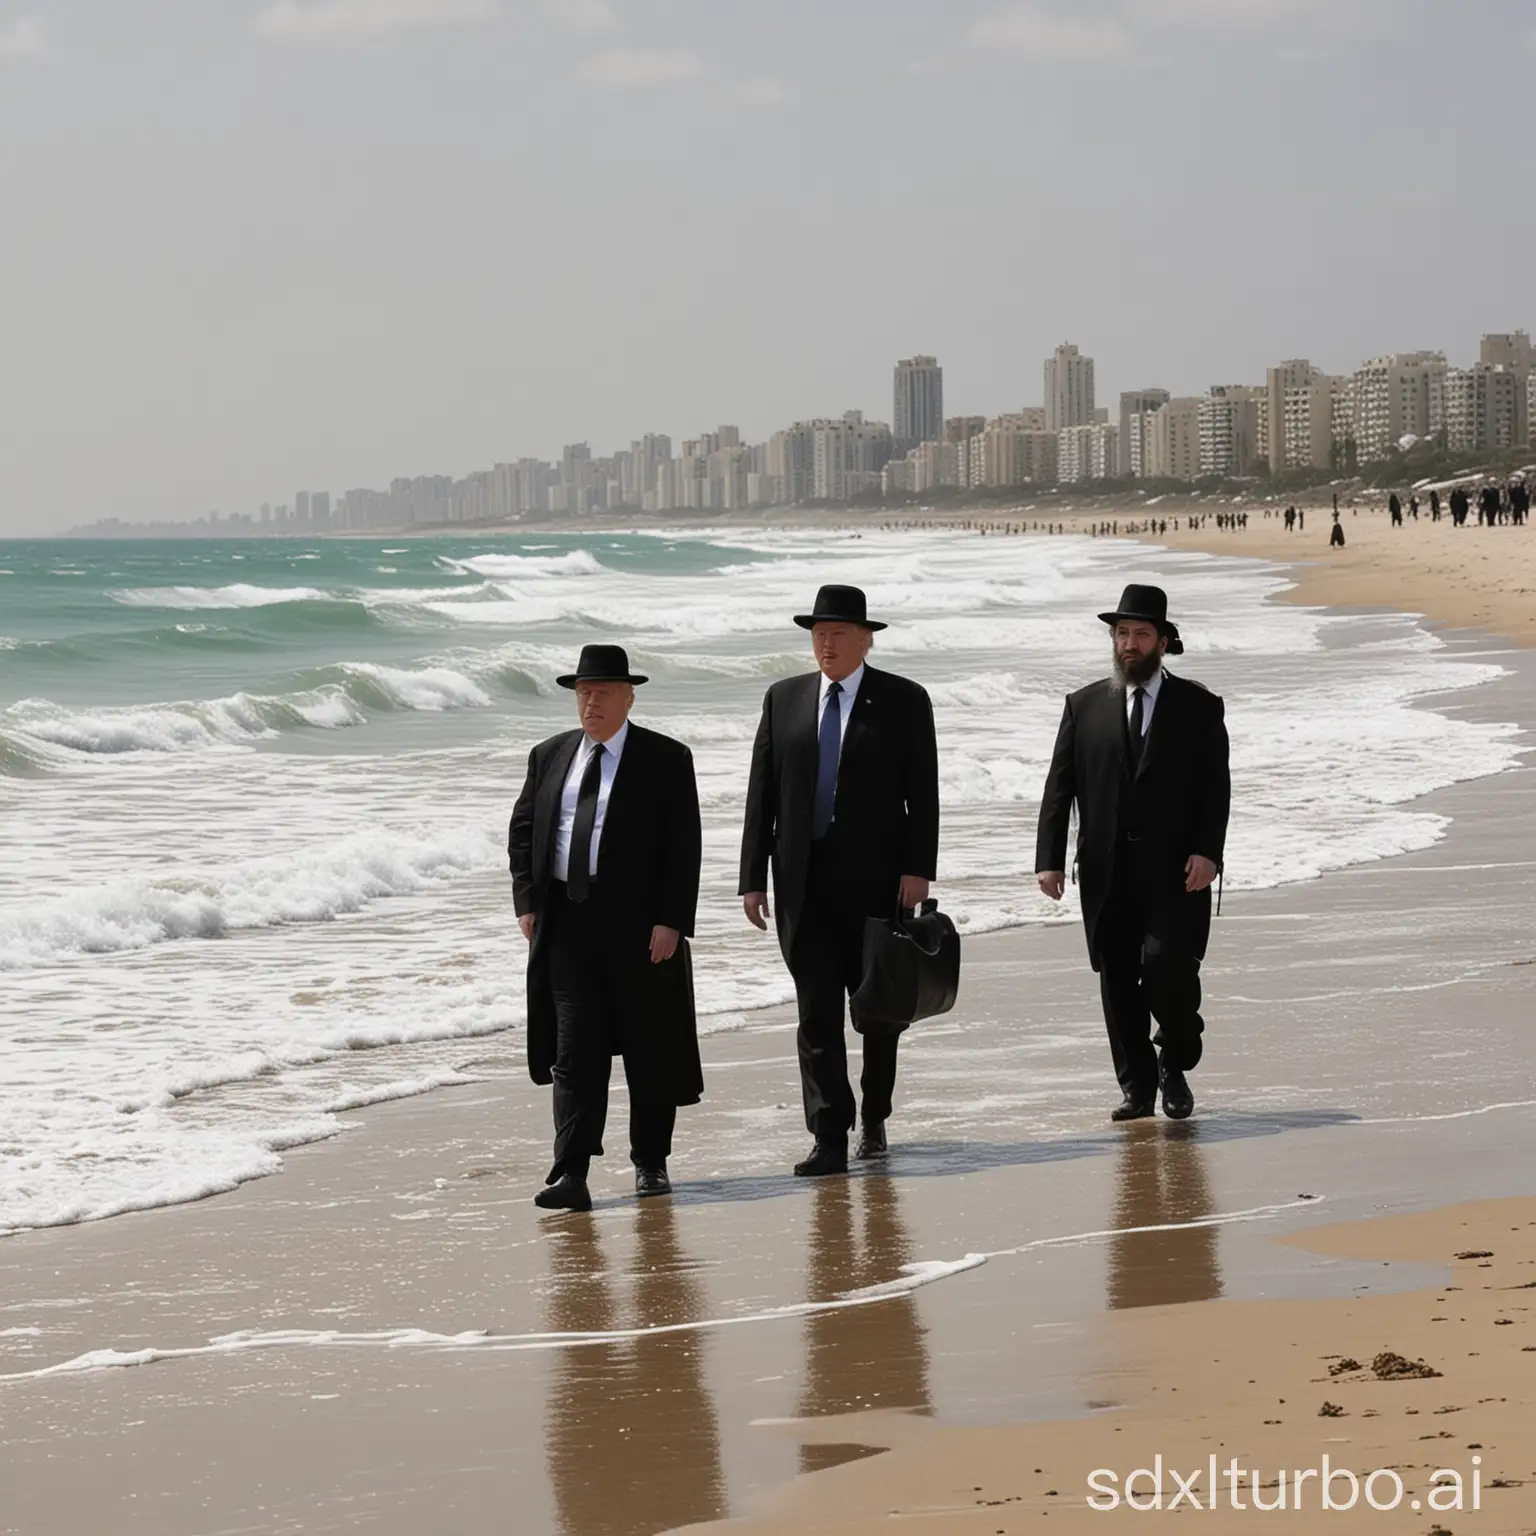 ultra orthodox  hasidic  men walking on a beach
with donald trump
